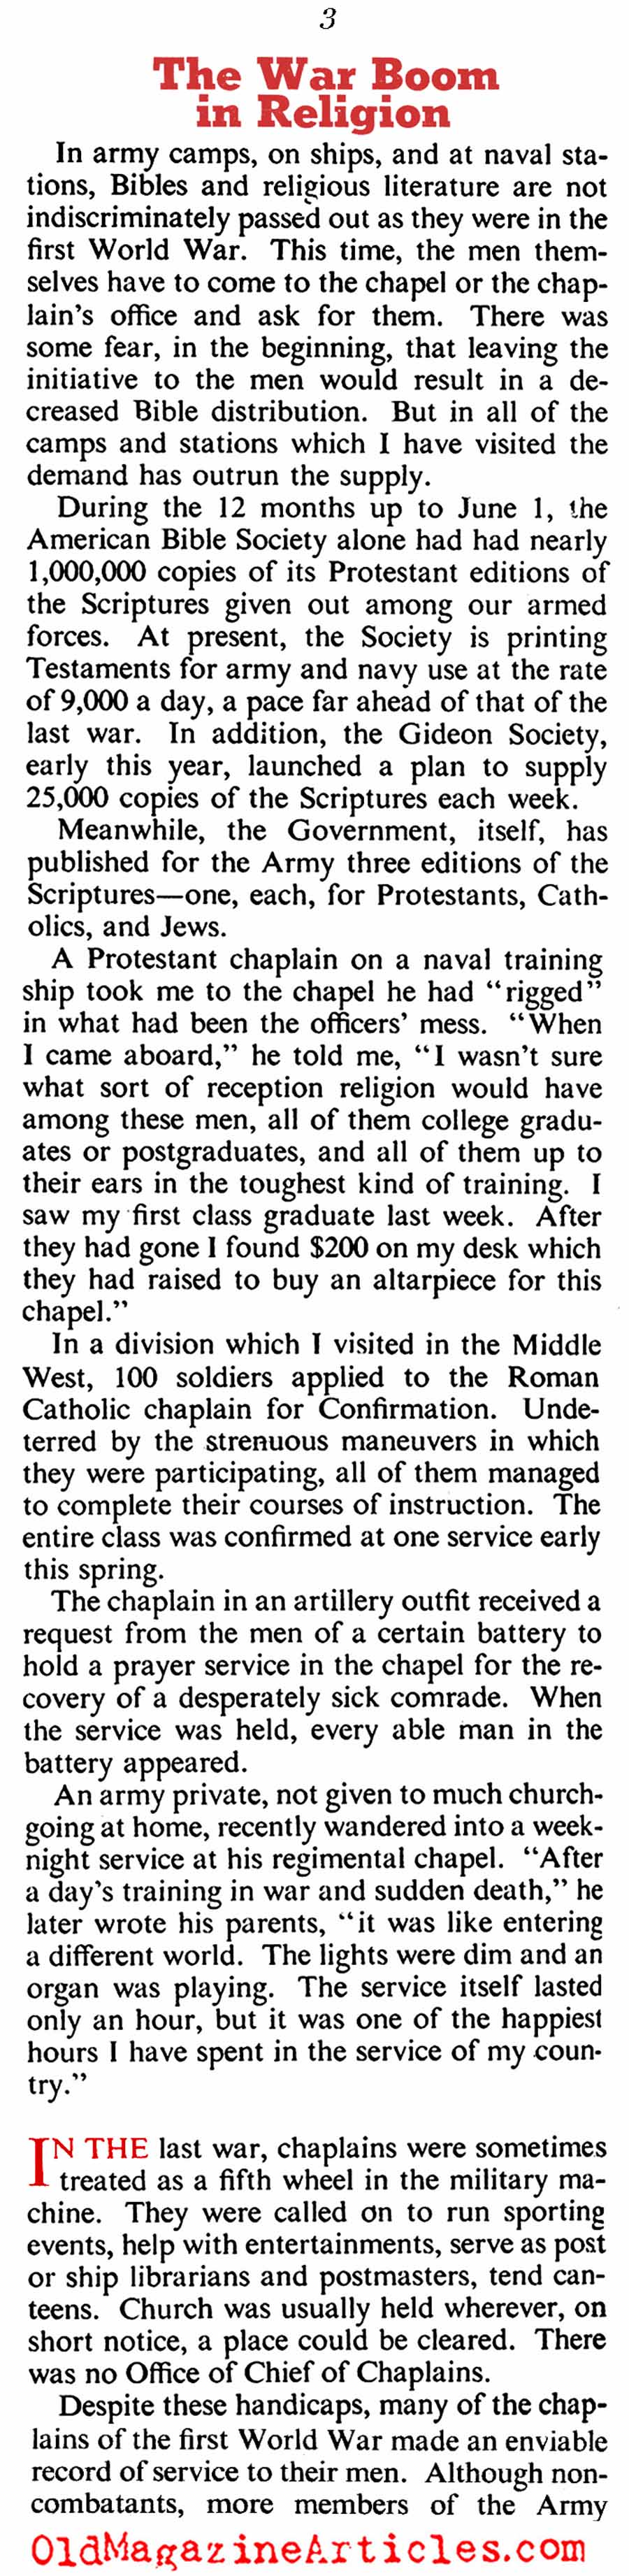 The W.W. II Revival In Faith (American Magazine, 1942)